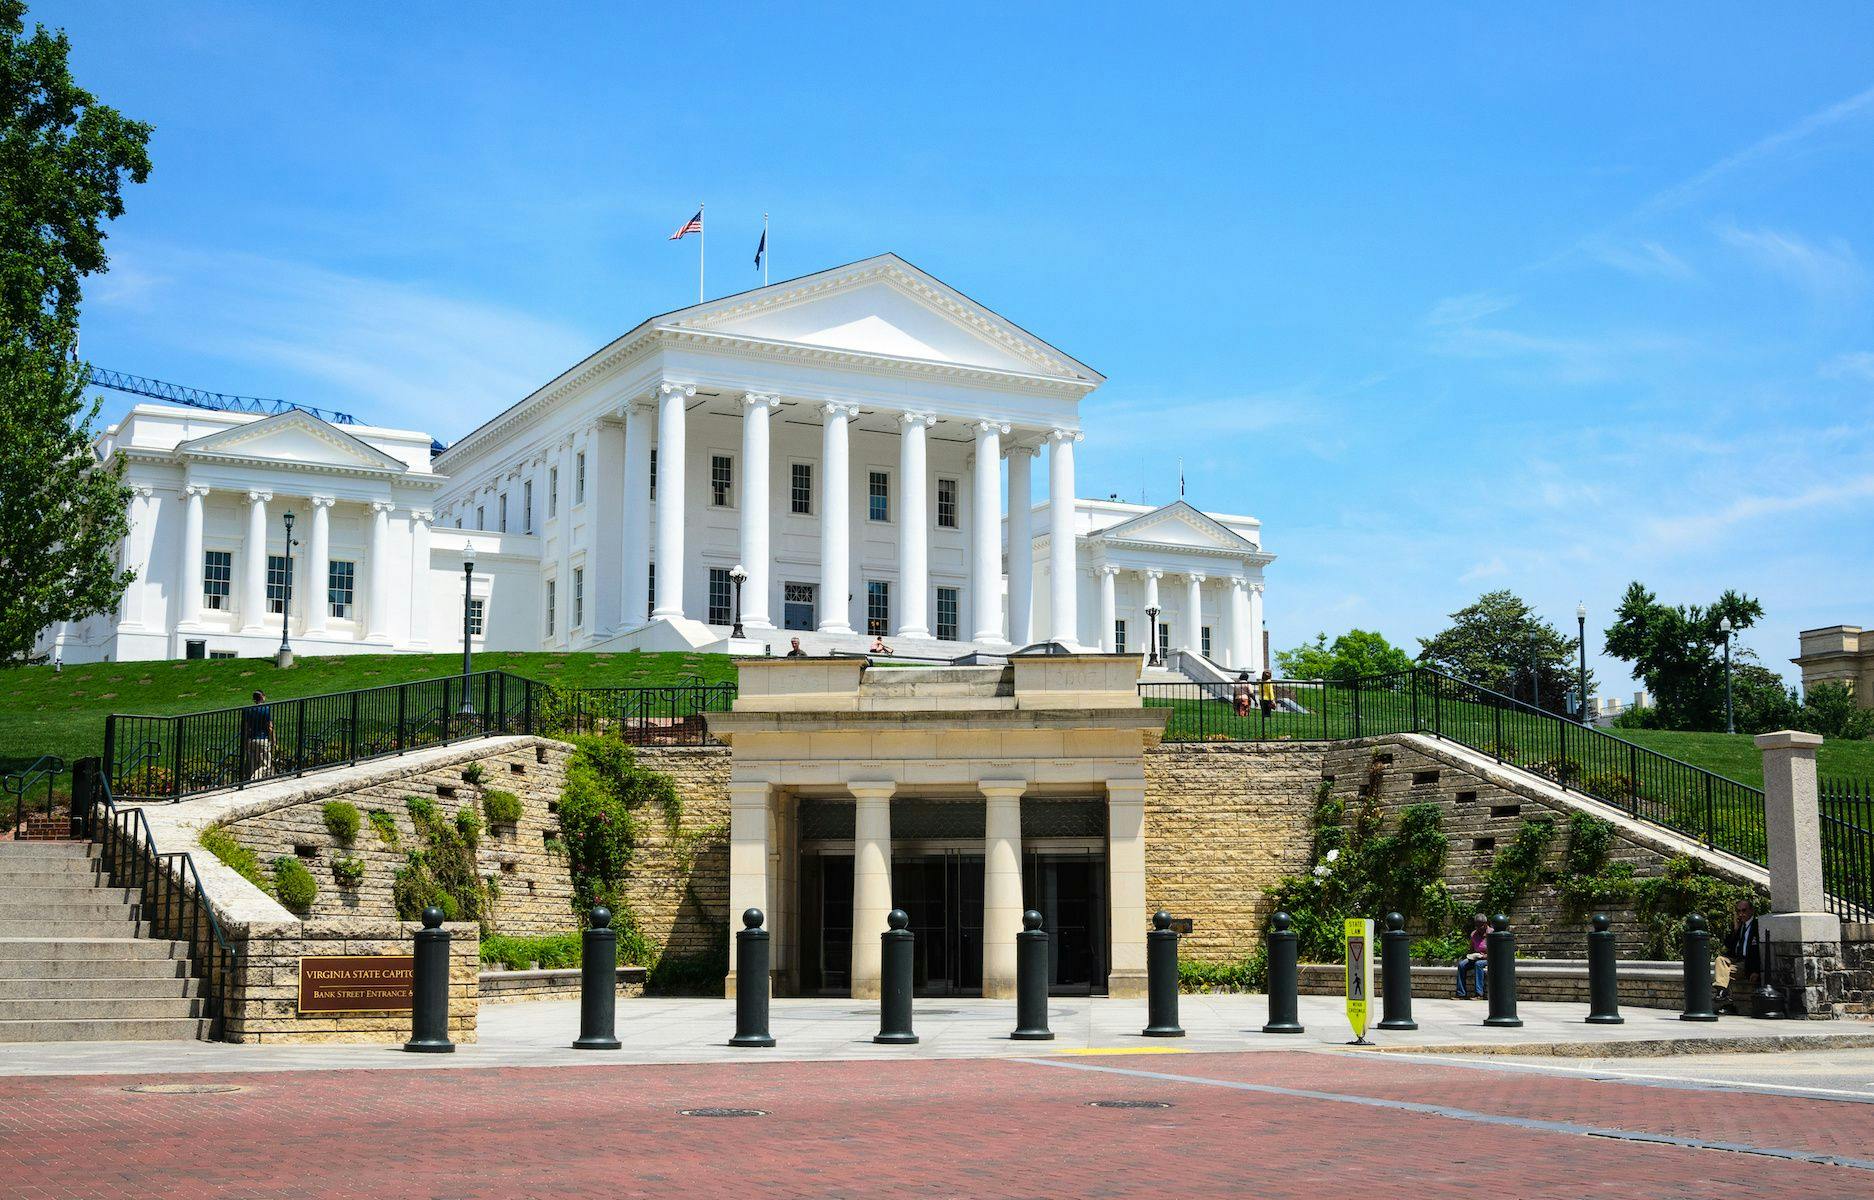 State Capitol of Virginia | image credit: Zack Frank / stock.adobe.com